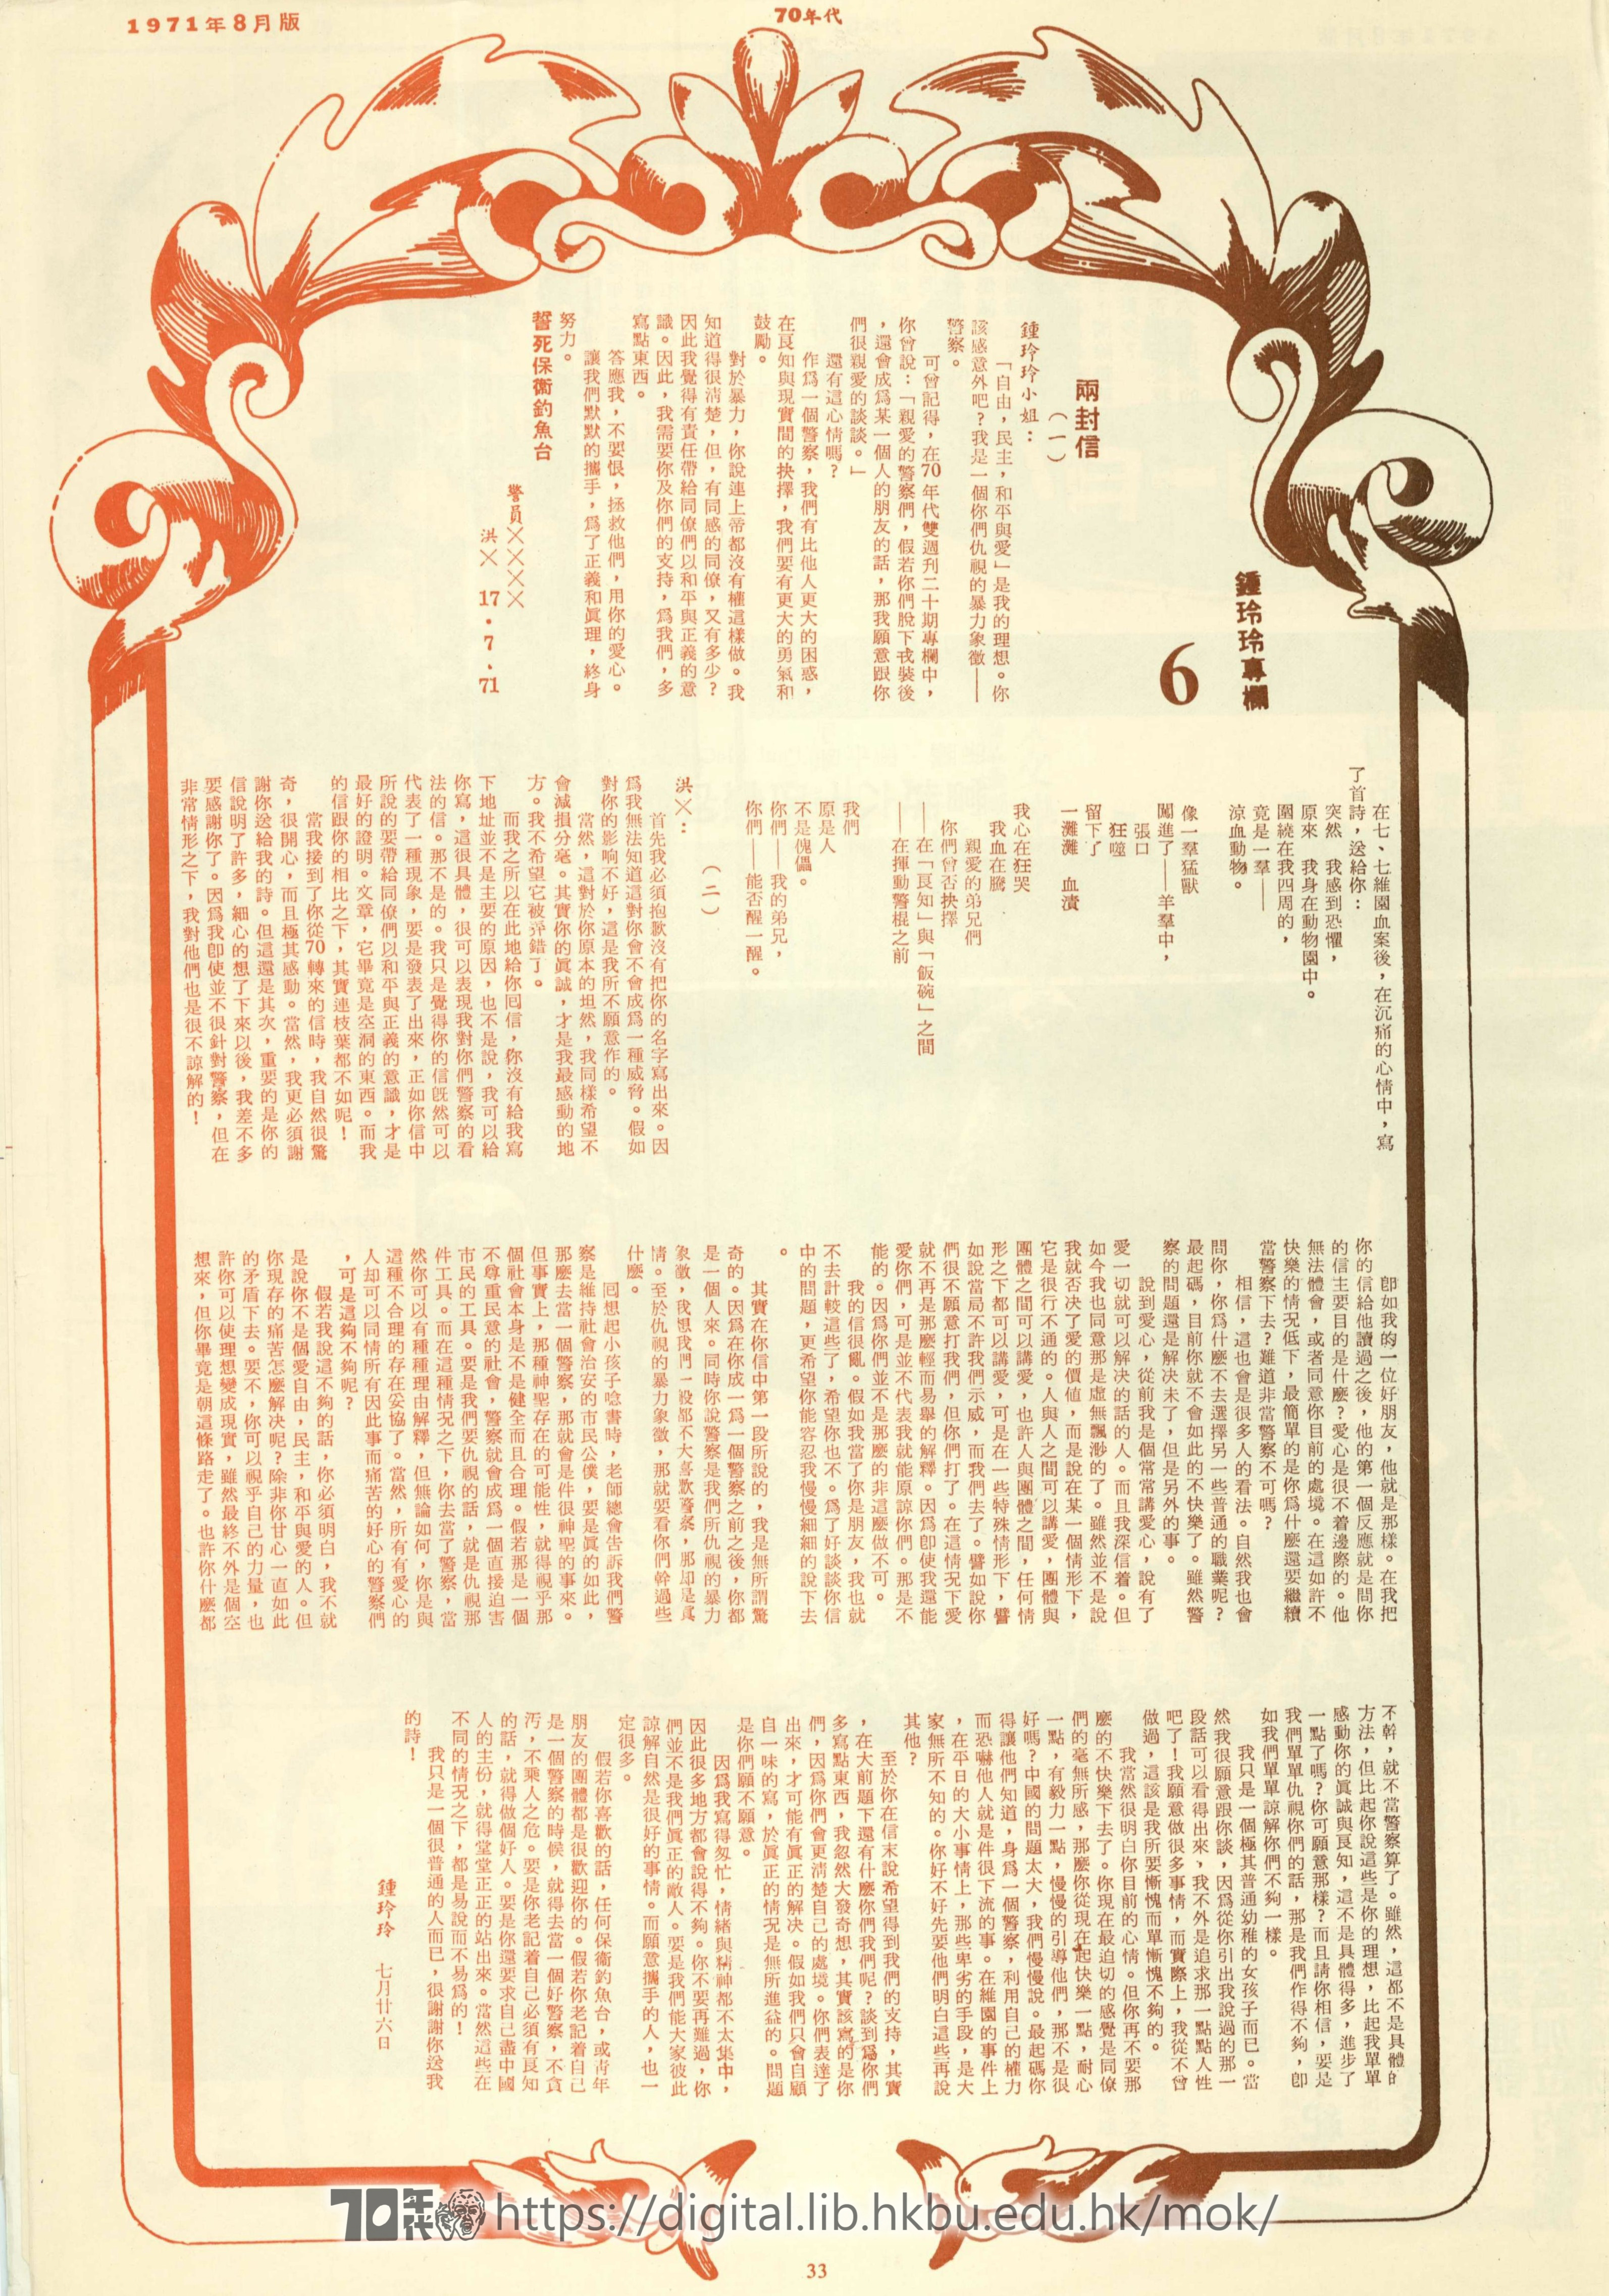  22 Column of Chung Ling Ling (6)  